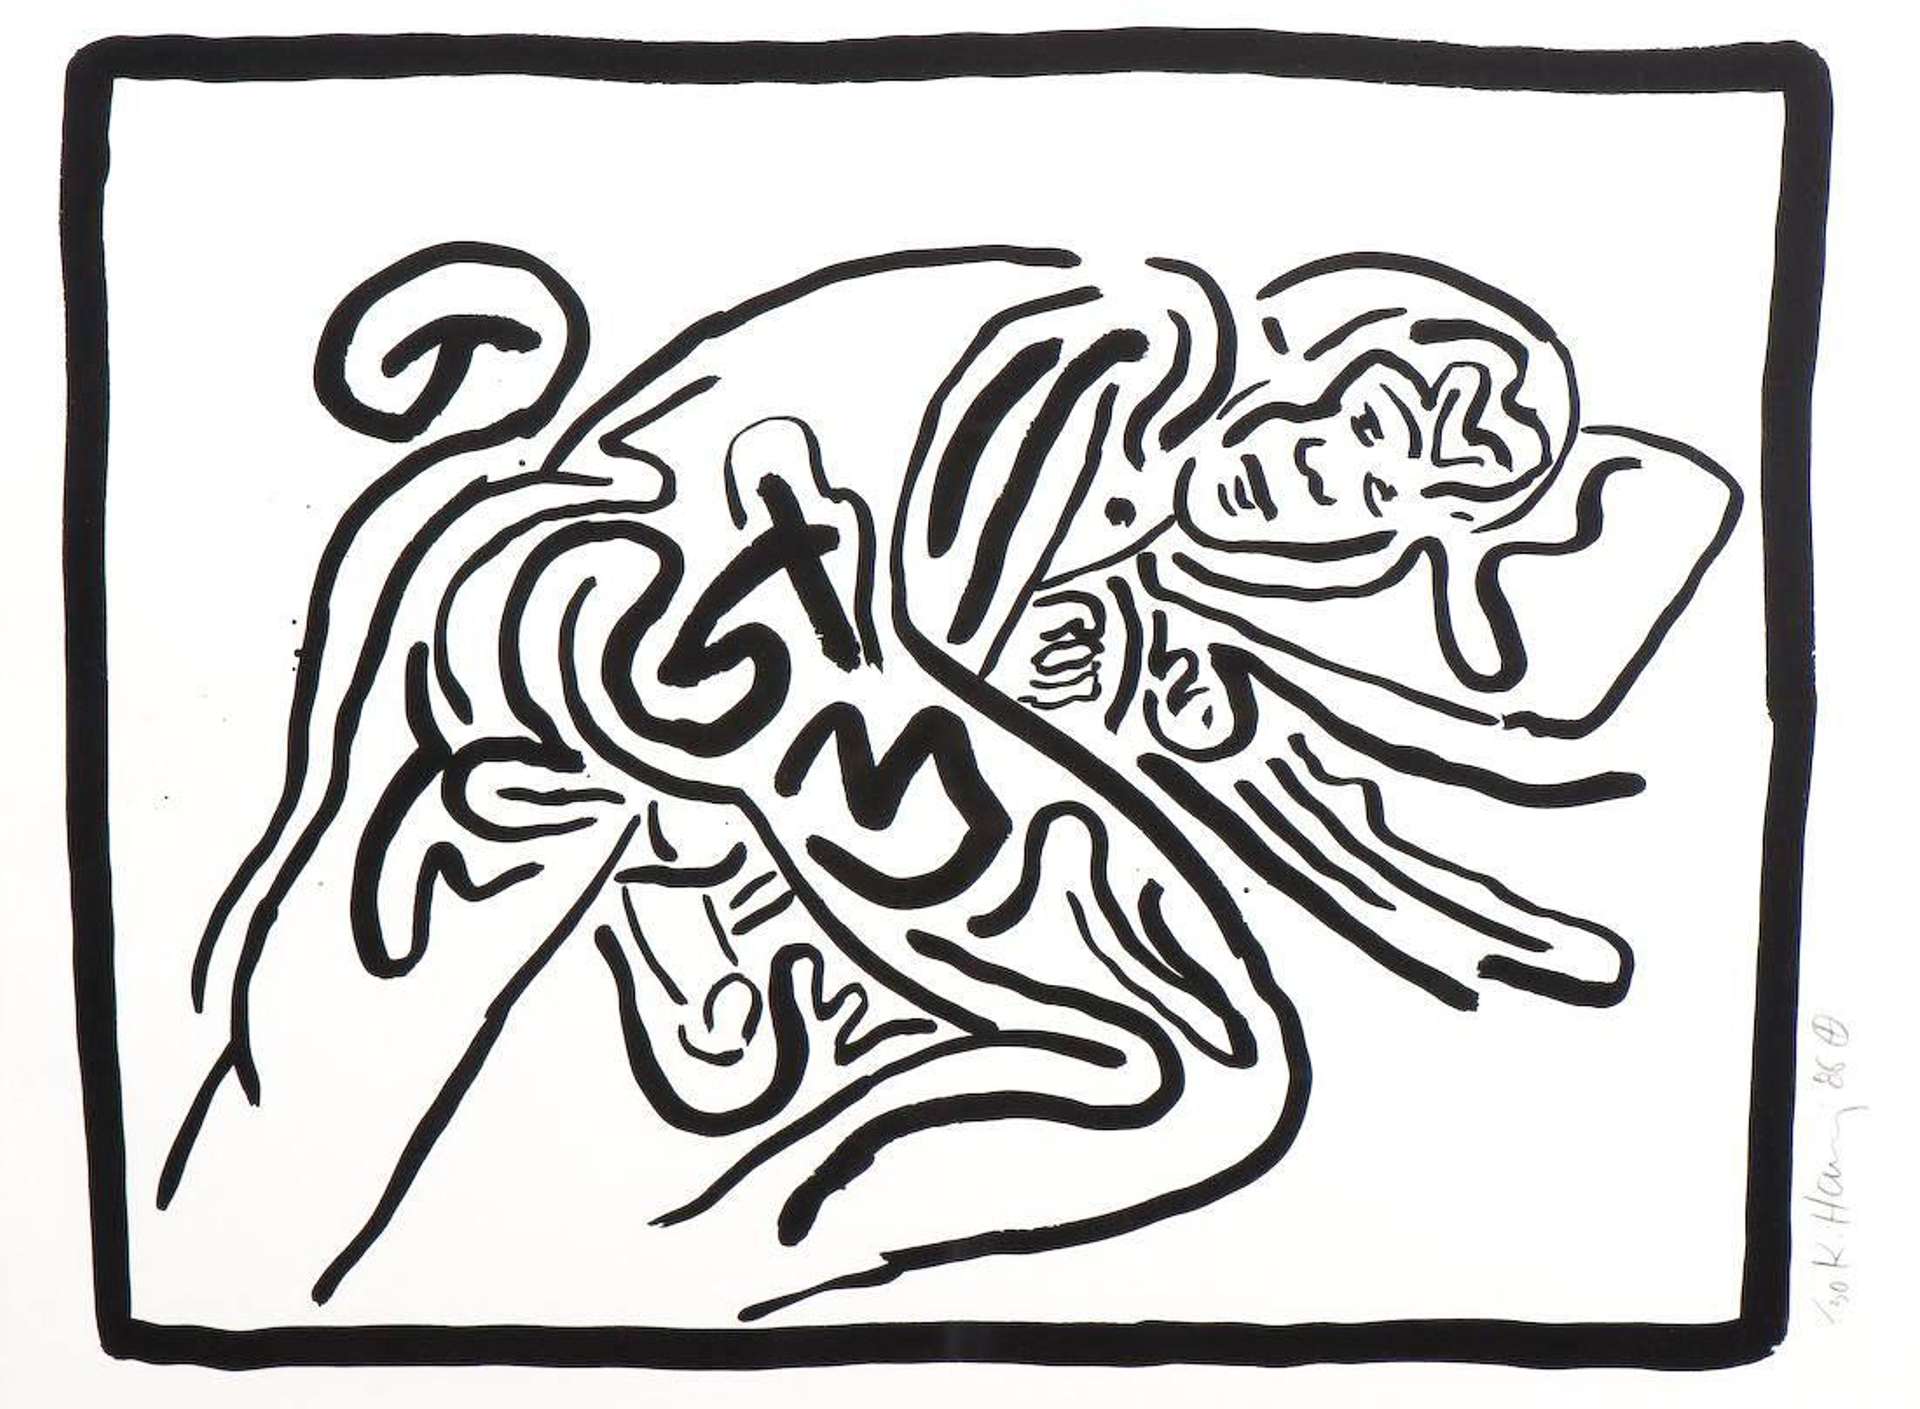 Bad Boys 5 - Signed Print by Keith Haring 1986 - MyArtBroker